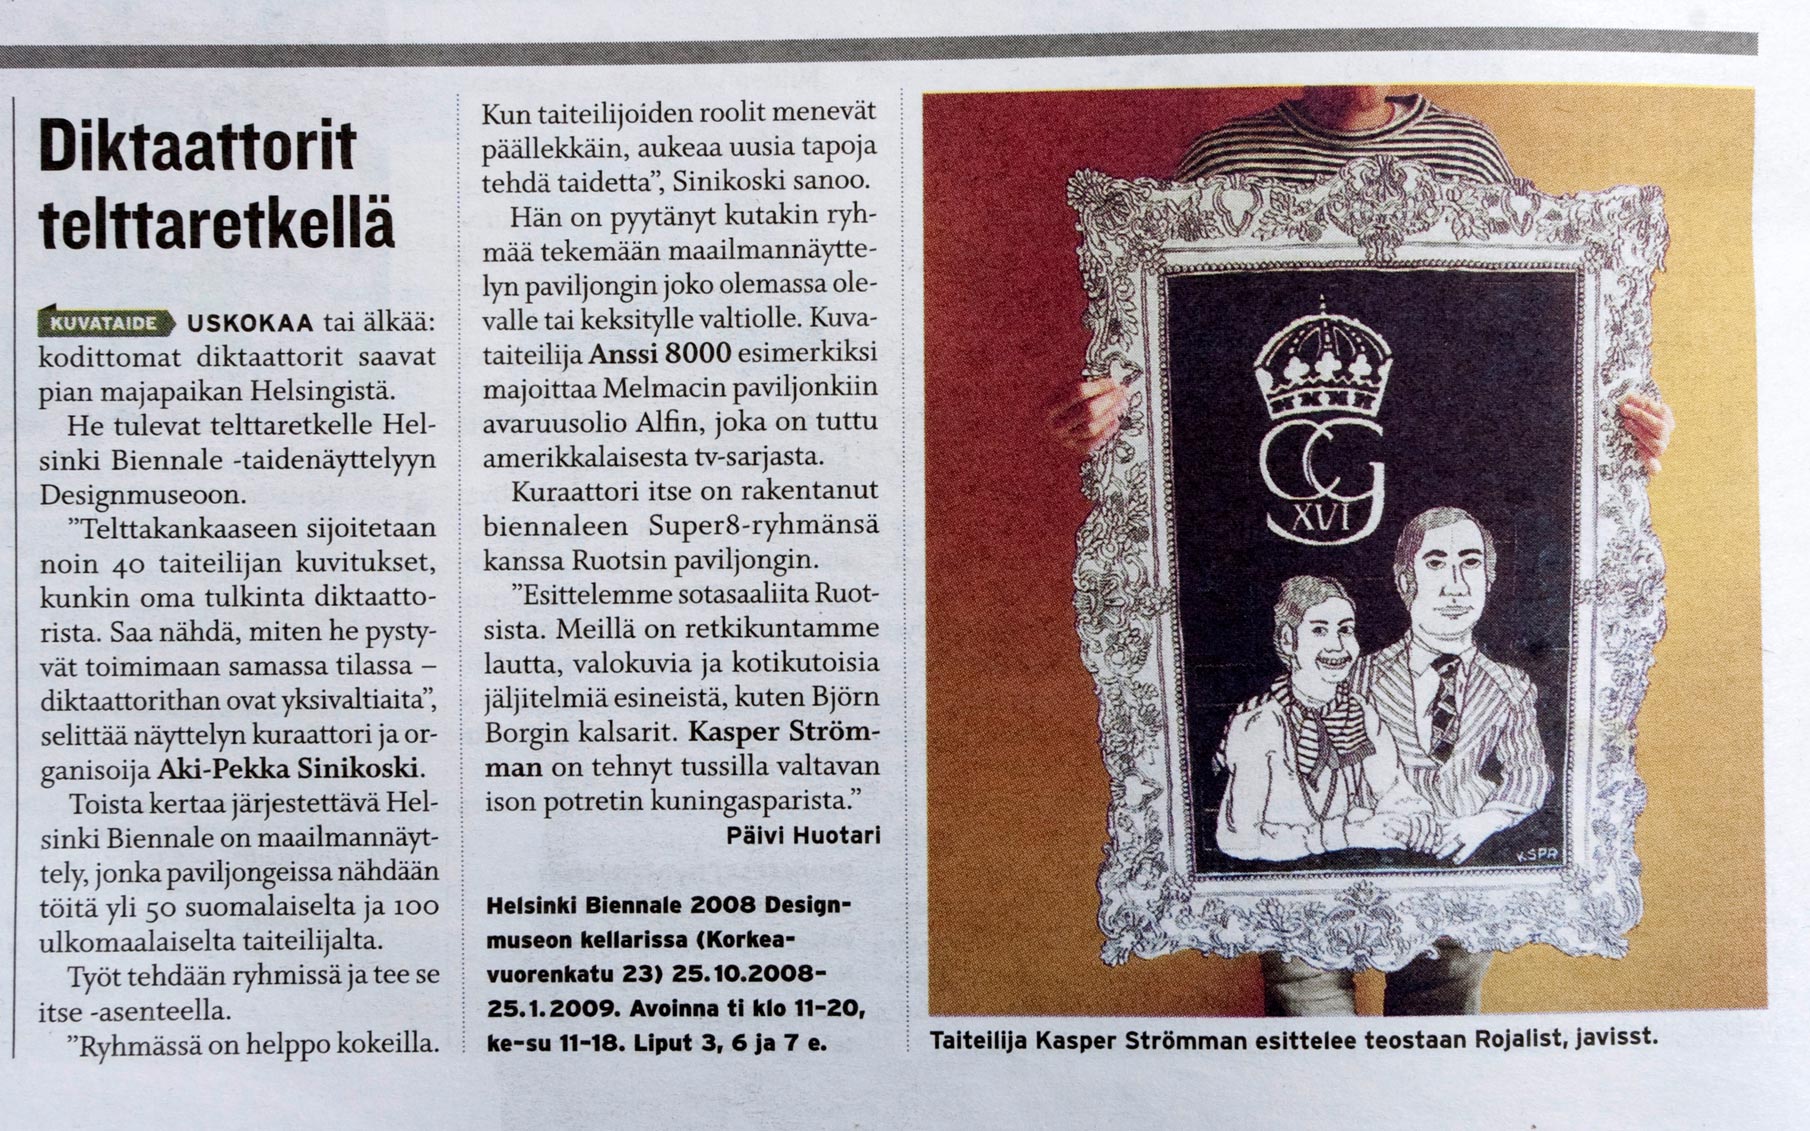 Helsingin Sanomat: NYT-liite article about Helsinki Biennale curated and arranged by Aki-Pekka Sinikoski at Design Museum in Helsinki